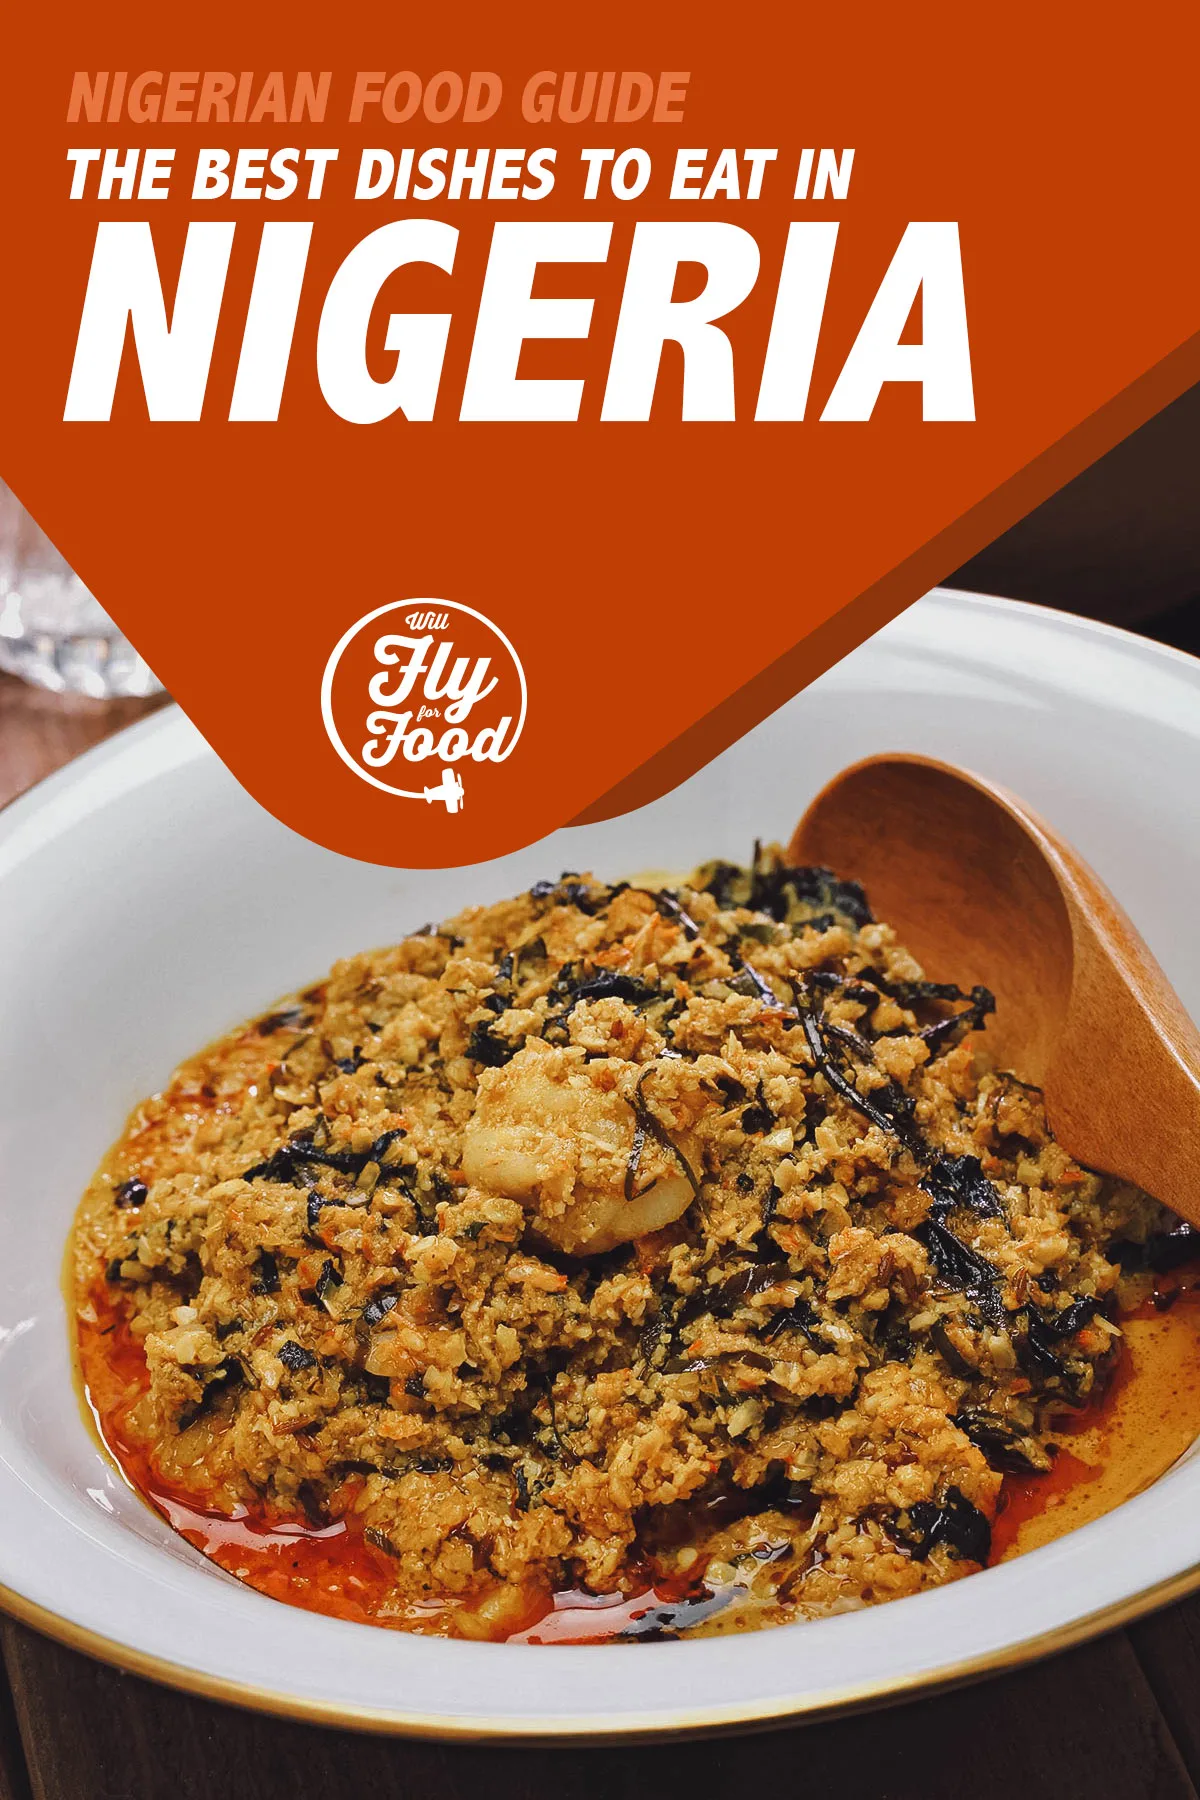 traditional nigerian food recipes